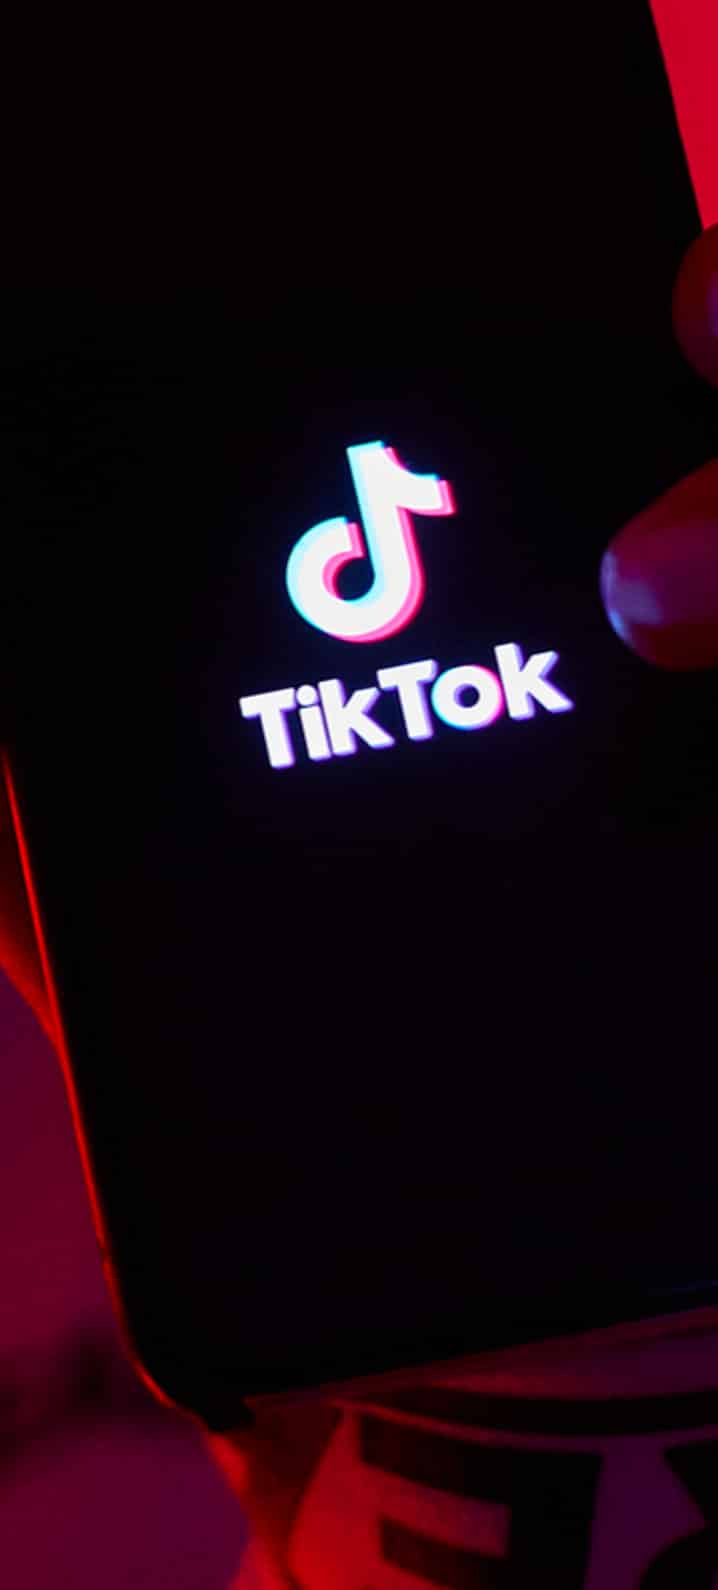 TikTok logo on a phone screen